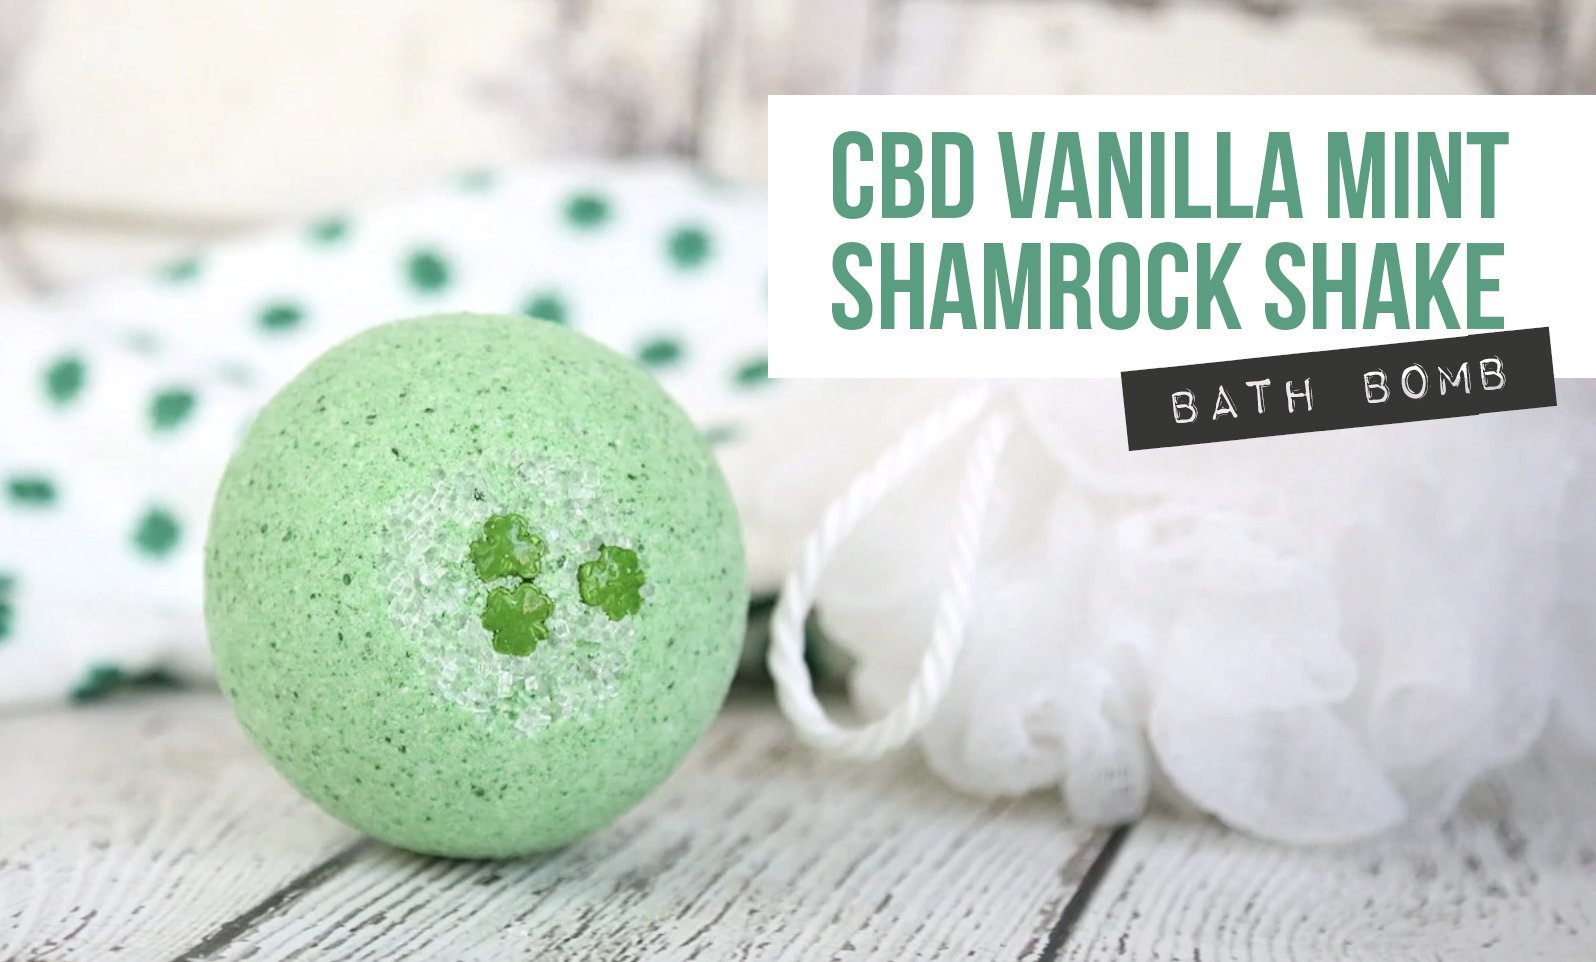 CBD Vanilla Mint Shamrock Shake Bath Bomb | The Dirt - Super Natural Personal Care